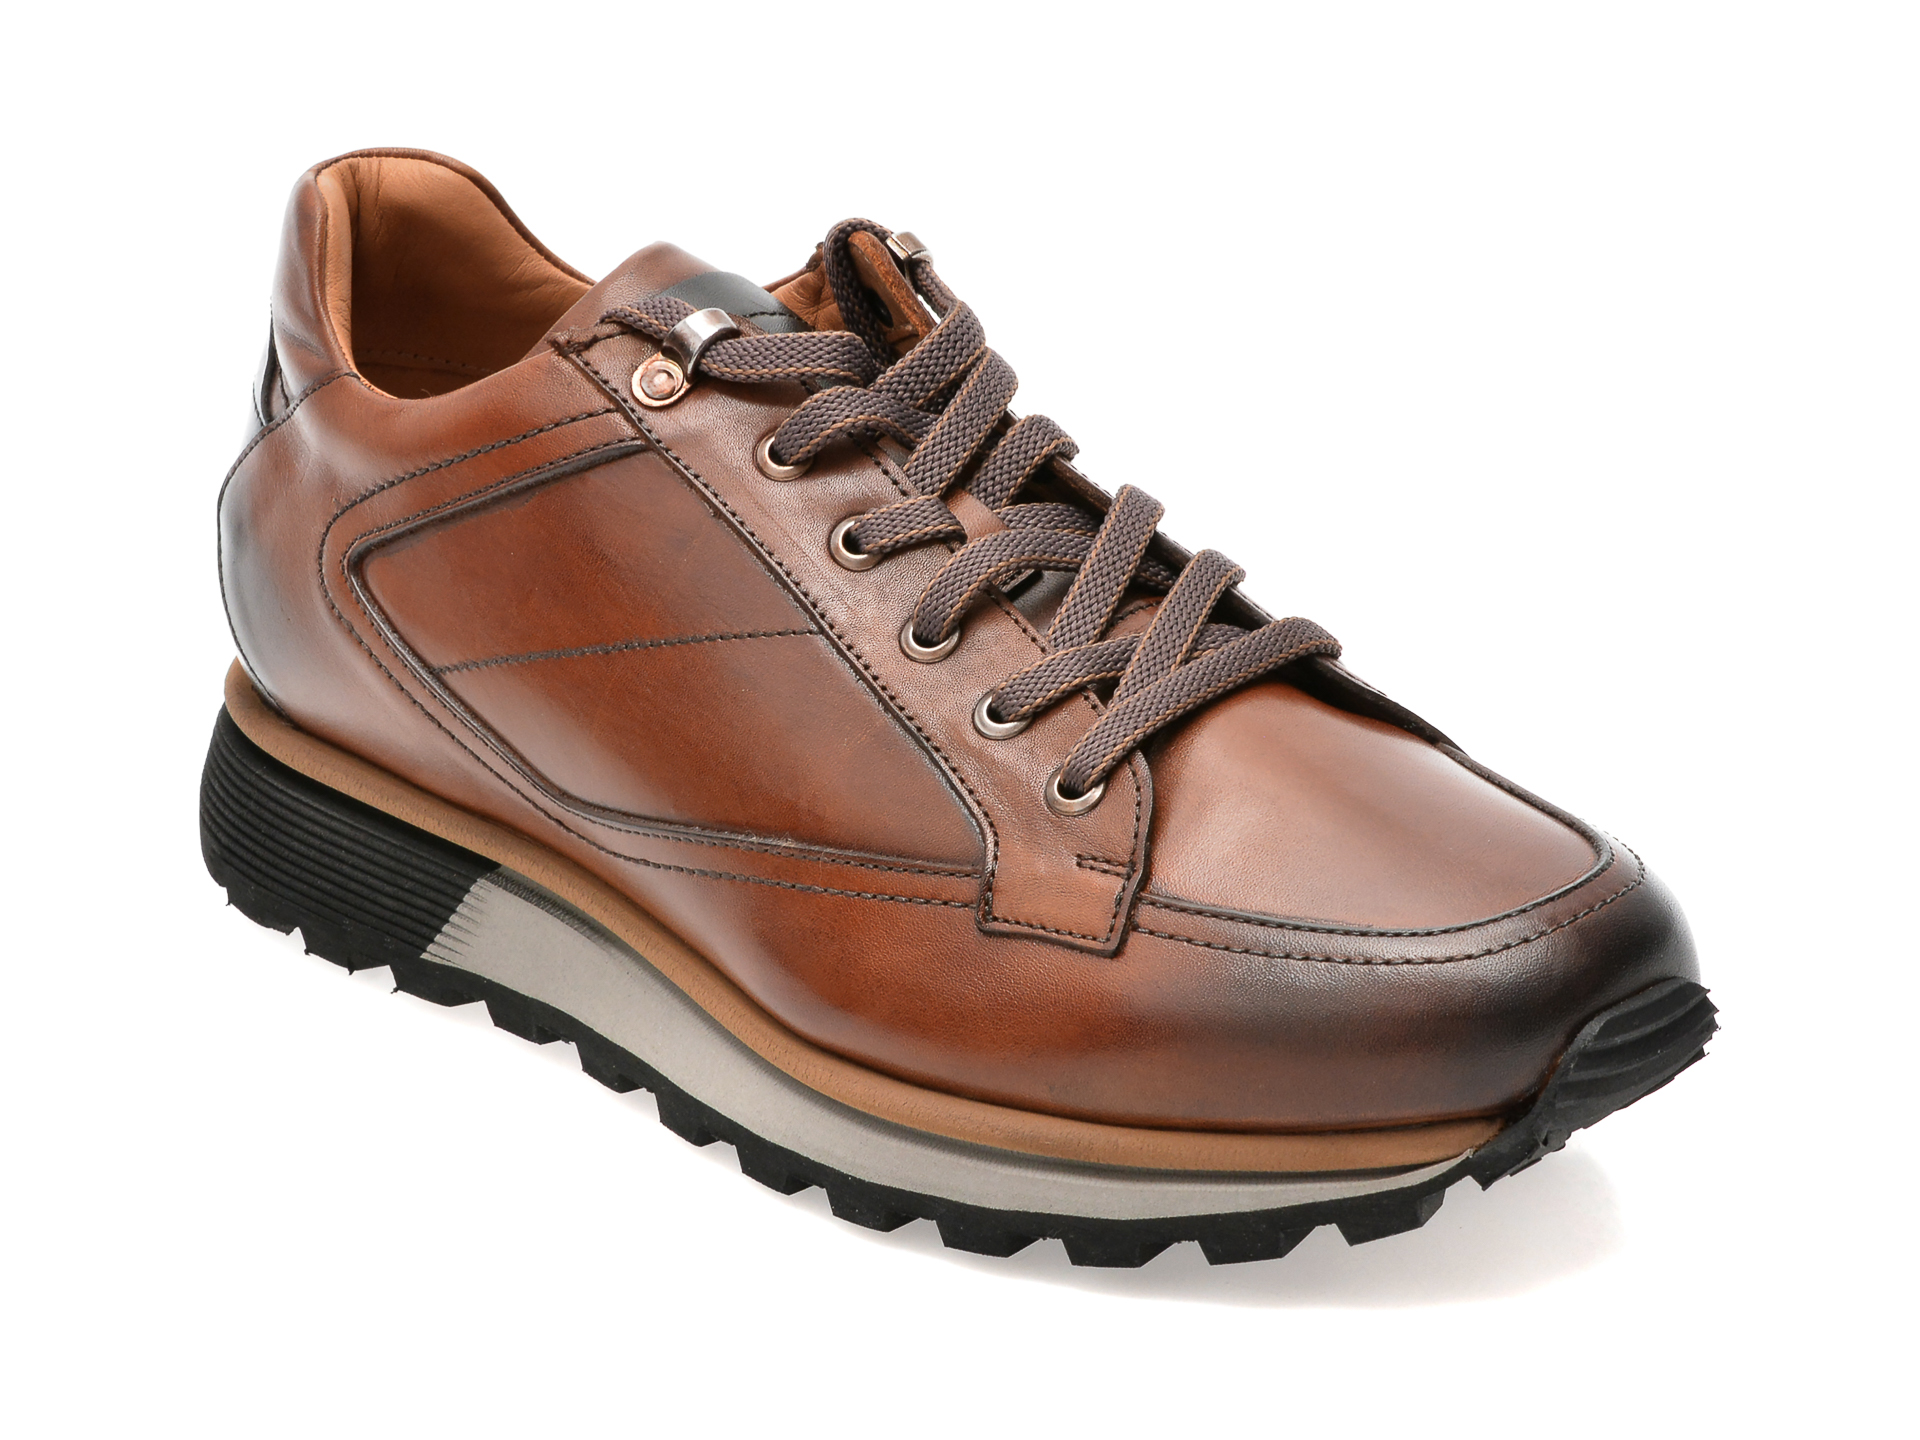 Pantofi EPICA maro, 2716, din piele naturala /barbati/pantofi